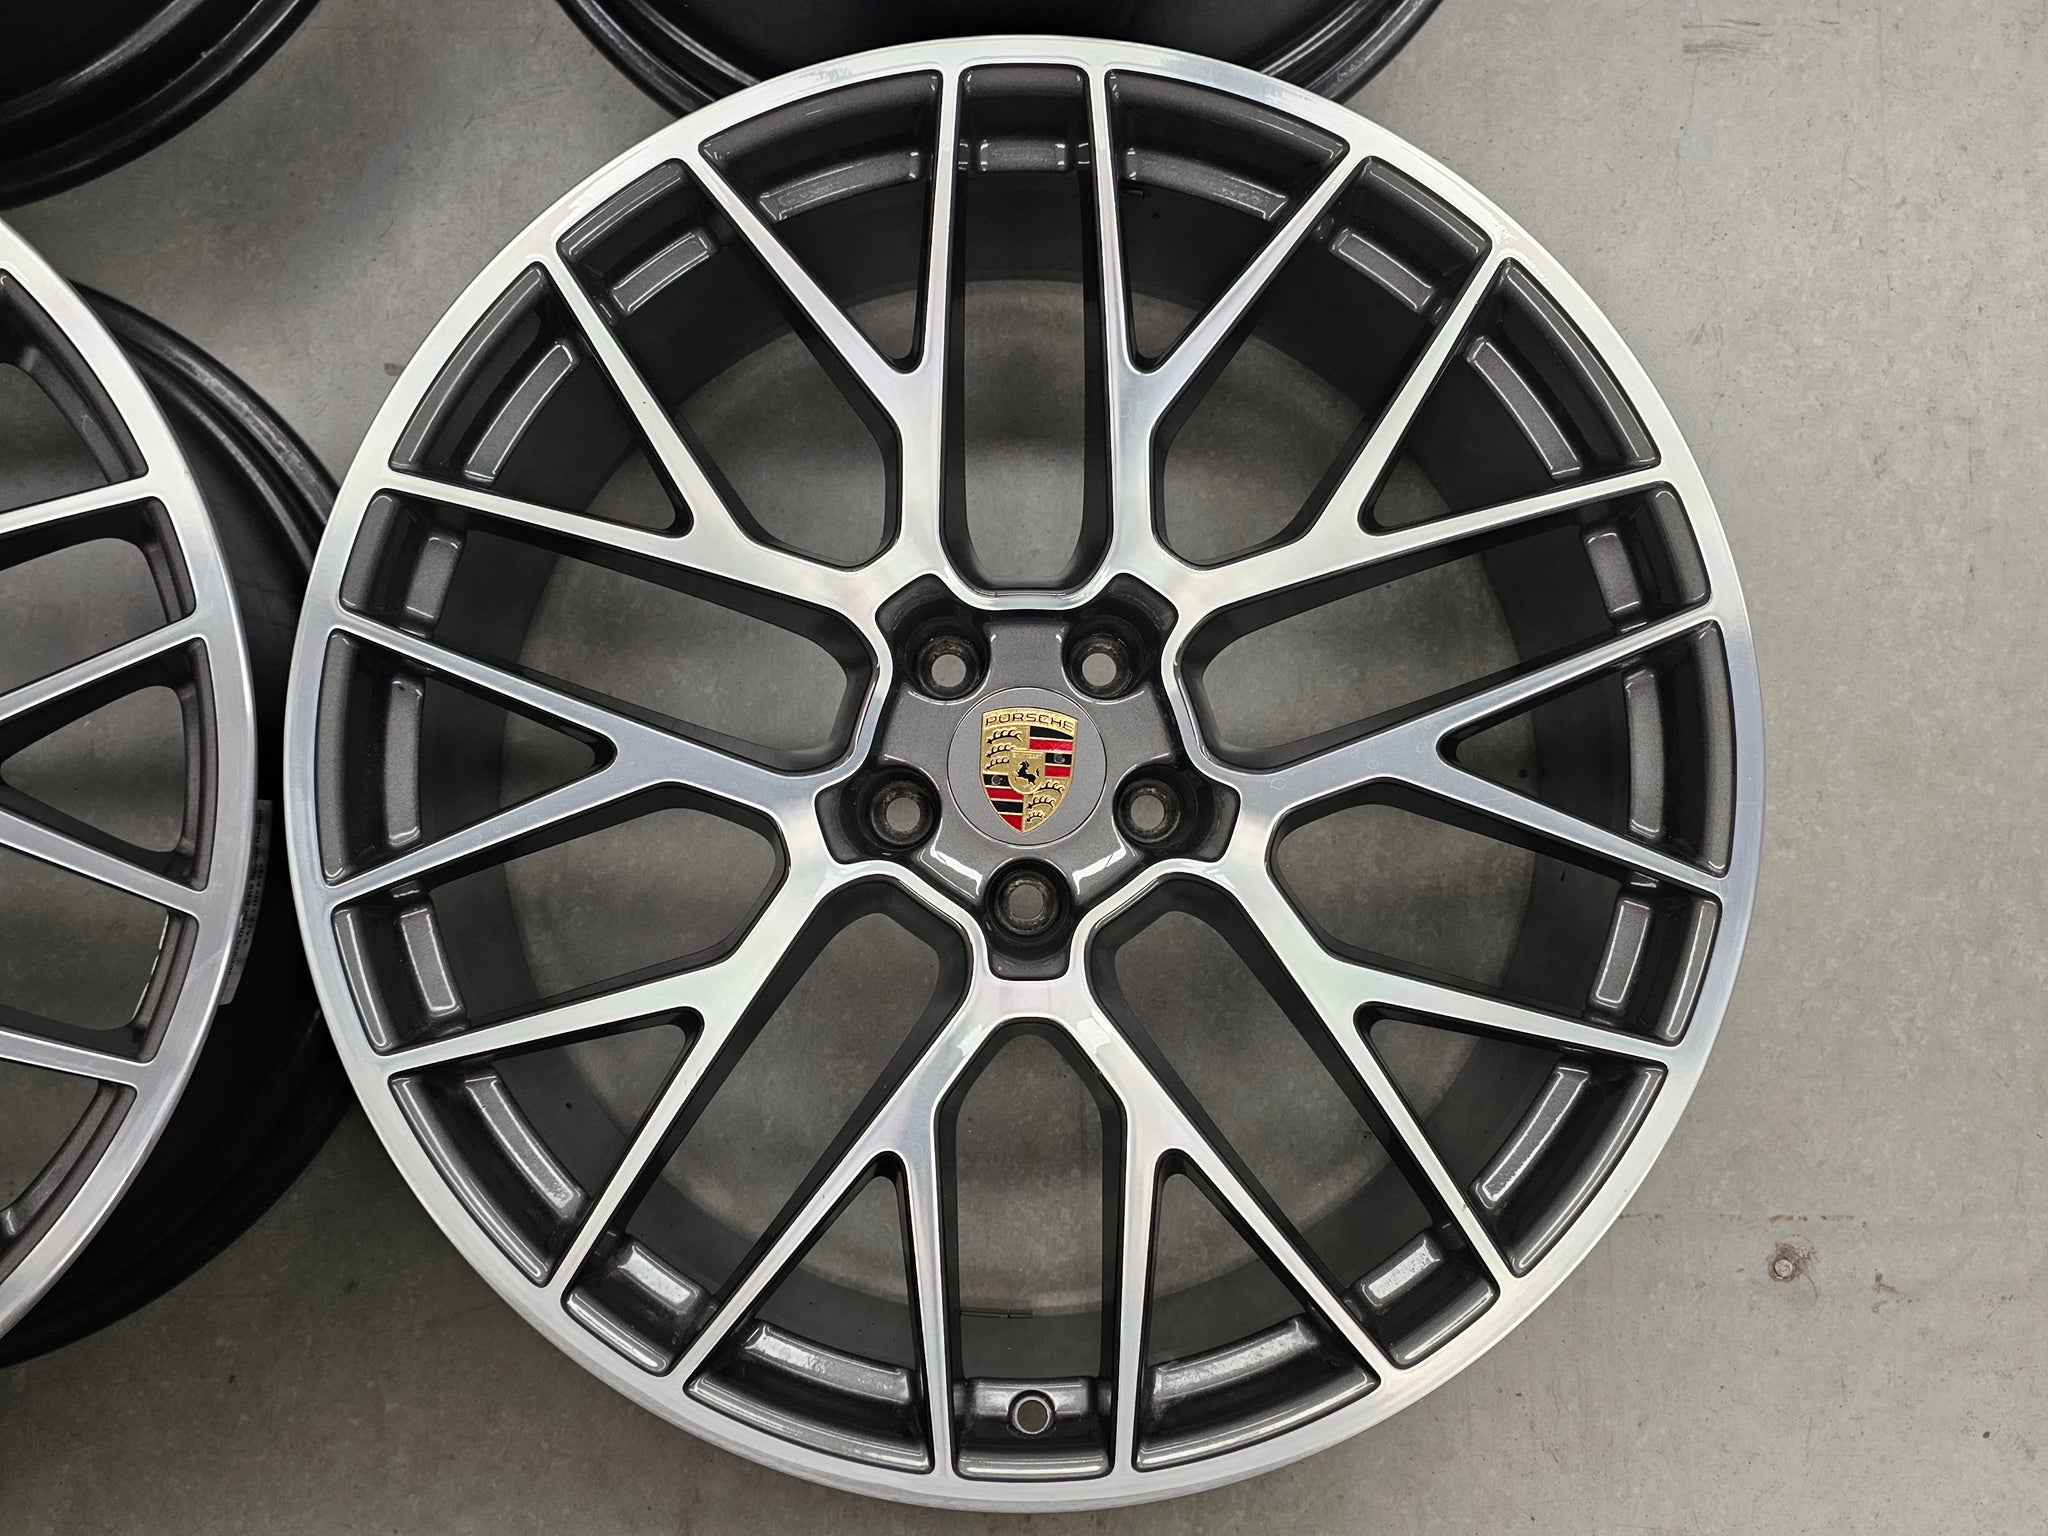 Load image into Gallery viewer, Genuine Porsche Macan 2021 Model 21 Inch Spyder Wheels Set of 4
